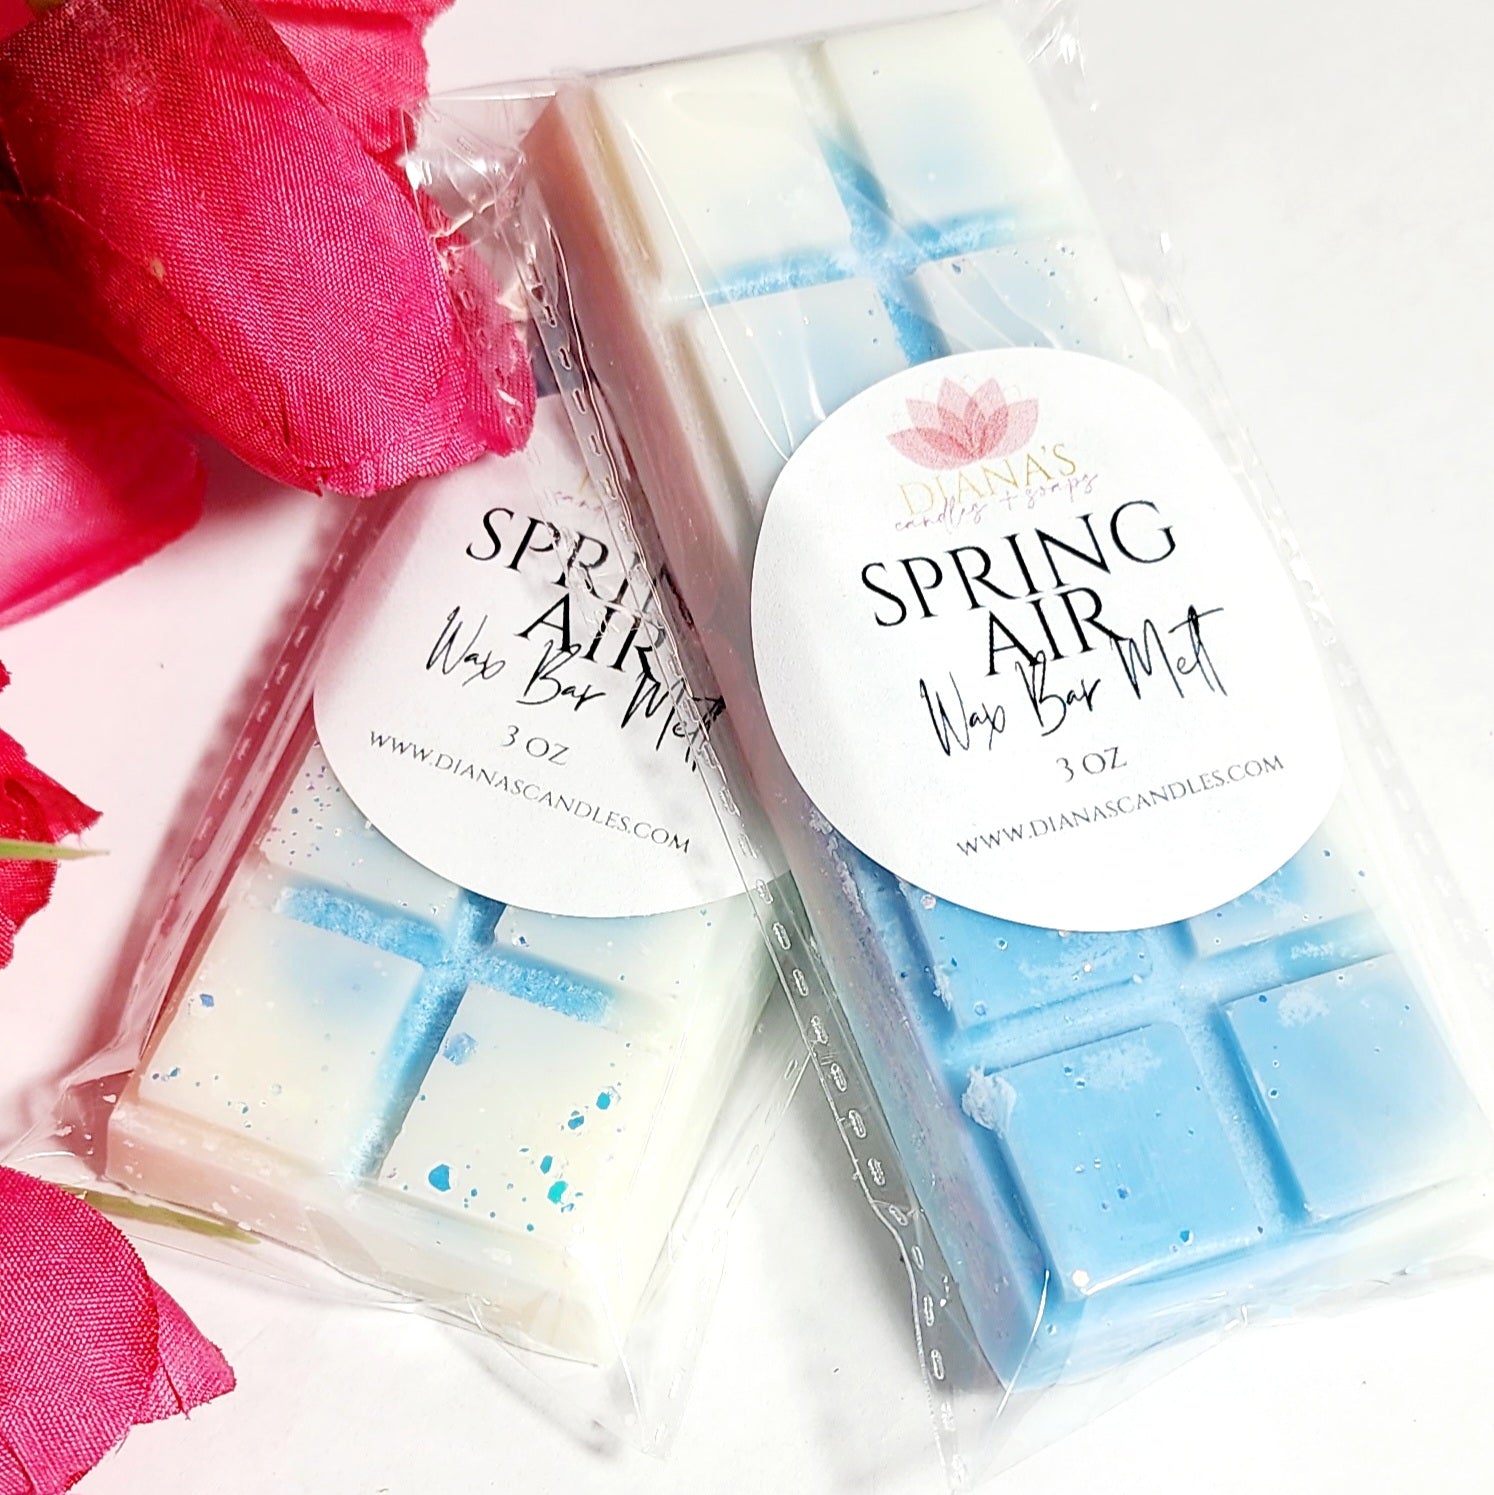 Spring Air Wax Snap Bar Diana's Candles and Soaps 